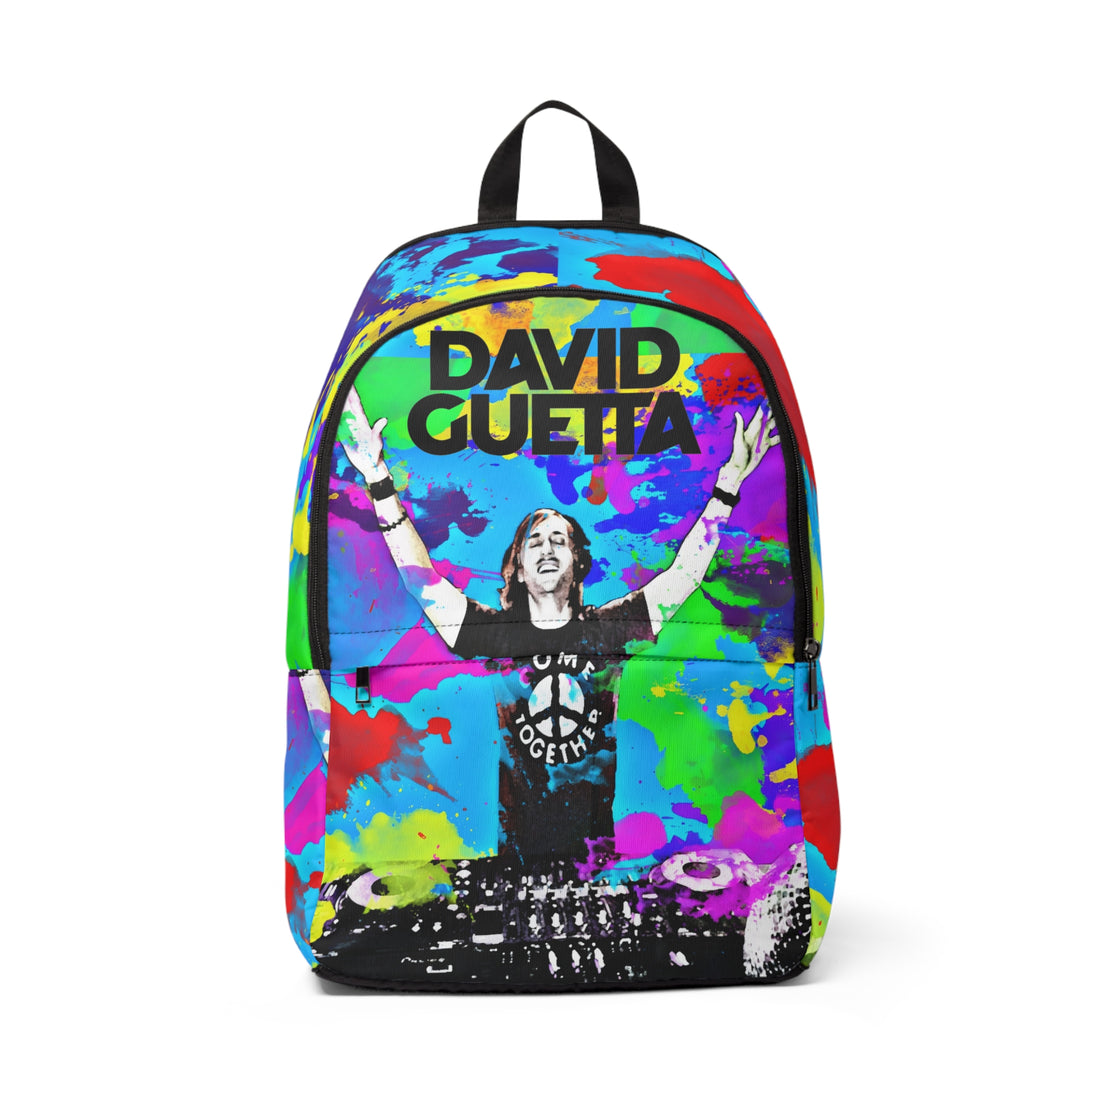 David Guetta Backpack Edm Rave Bag